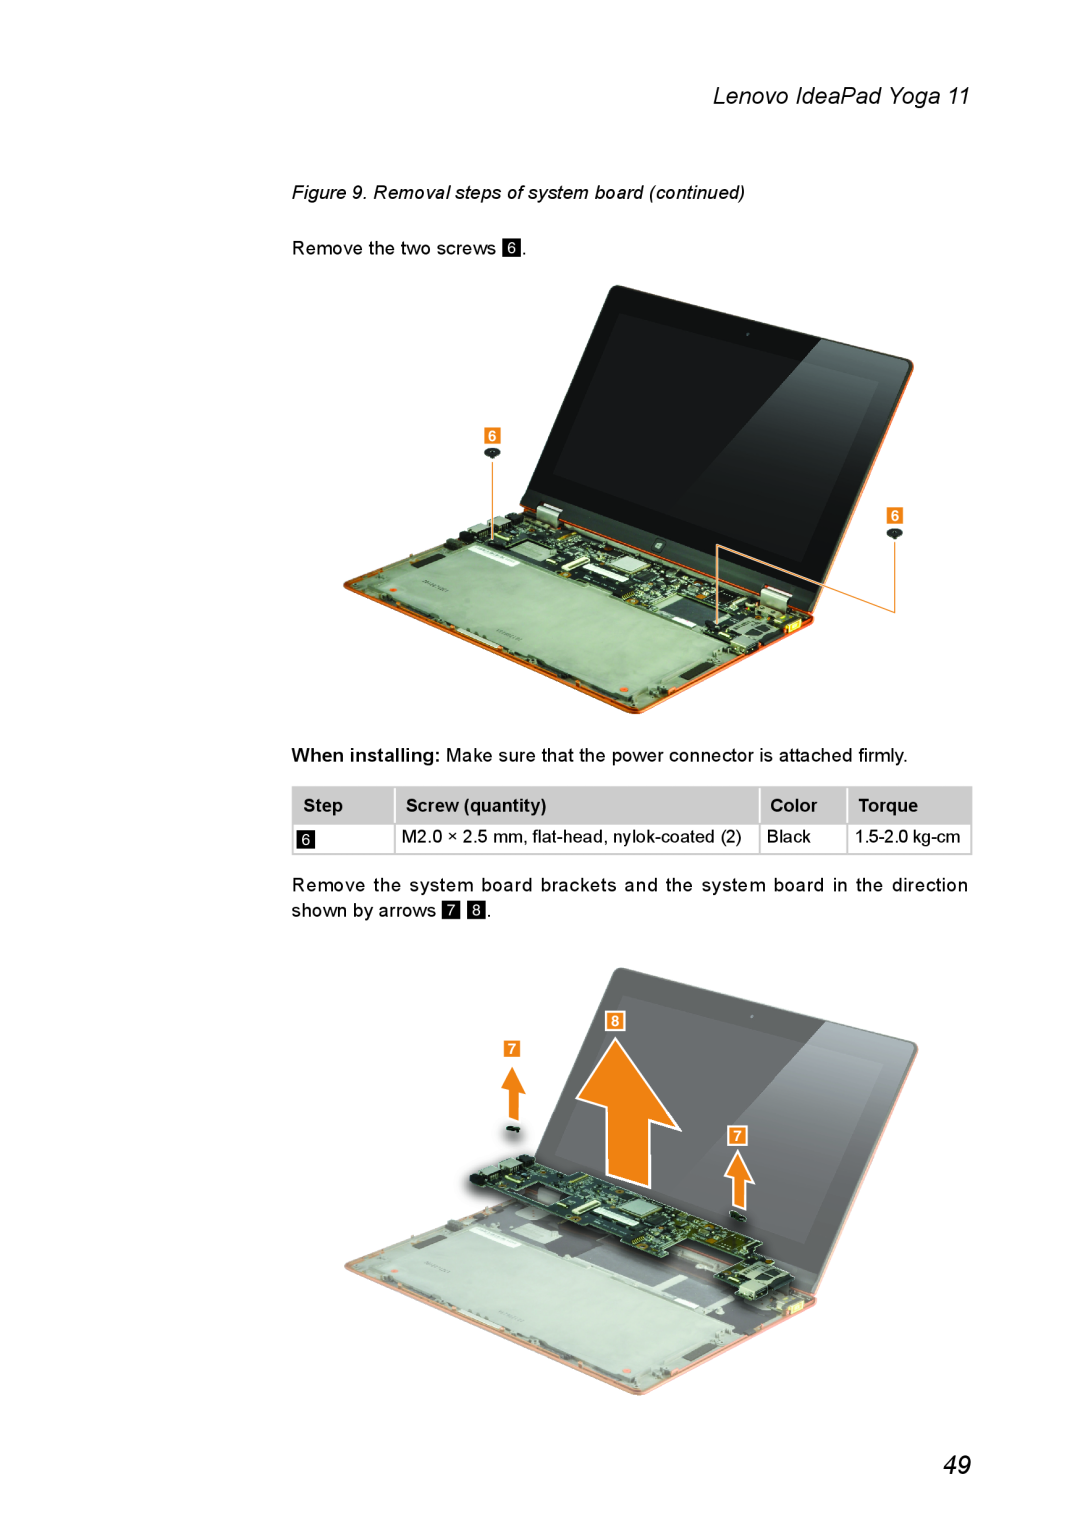 Lenovo 11 manual Lenovo IdeaPad Yoga, Removal steps of system board continued, Step, Screw quantity, Color, Torque 